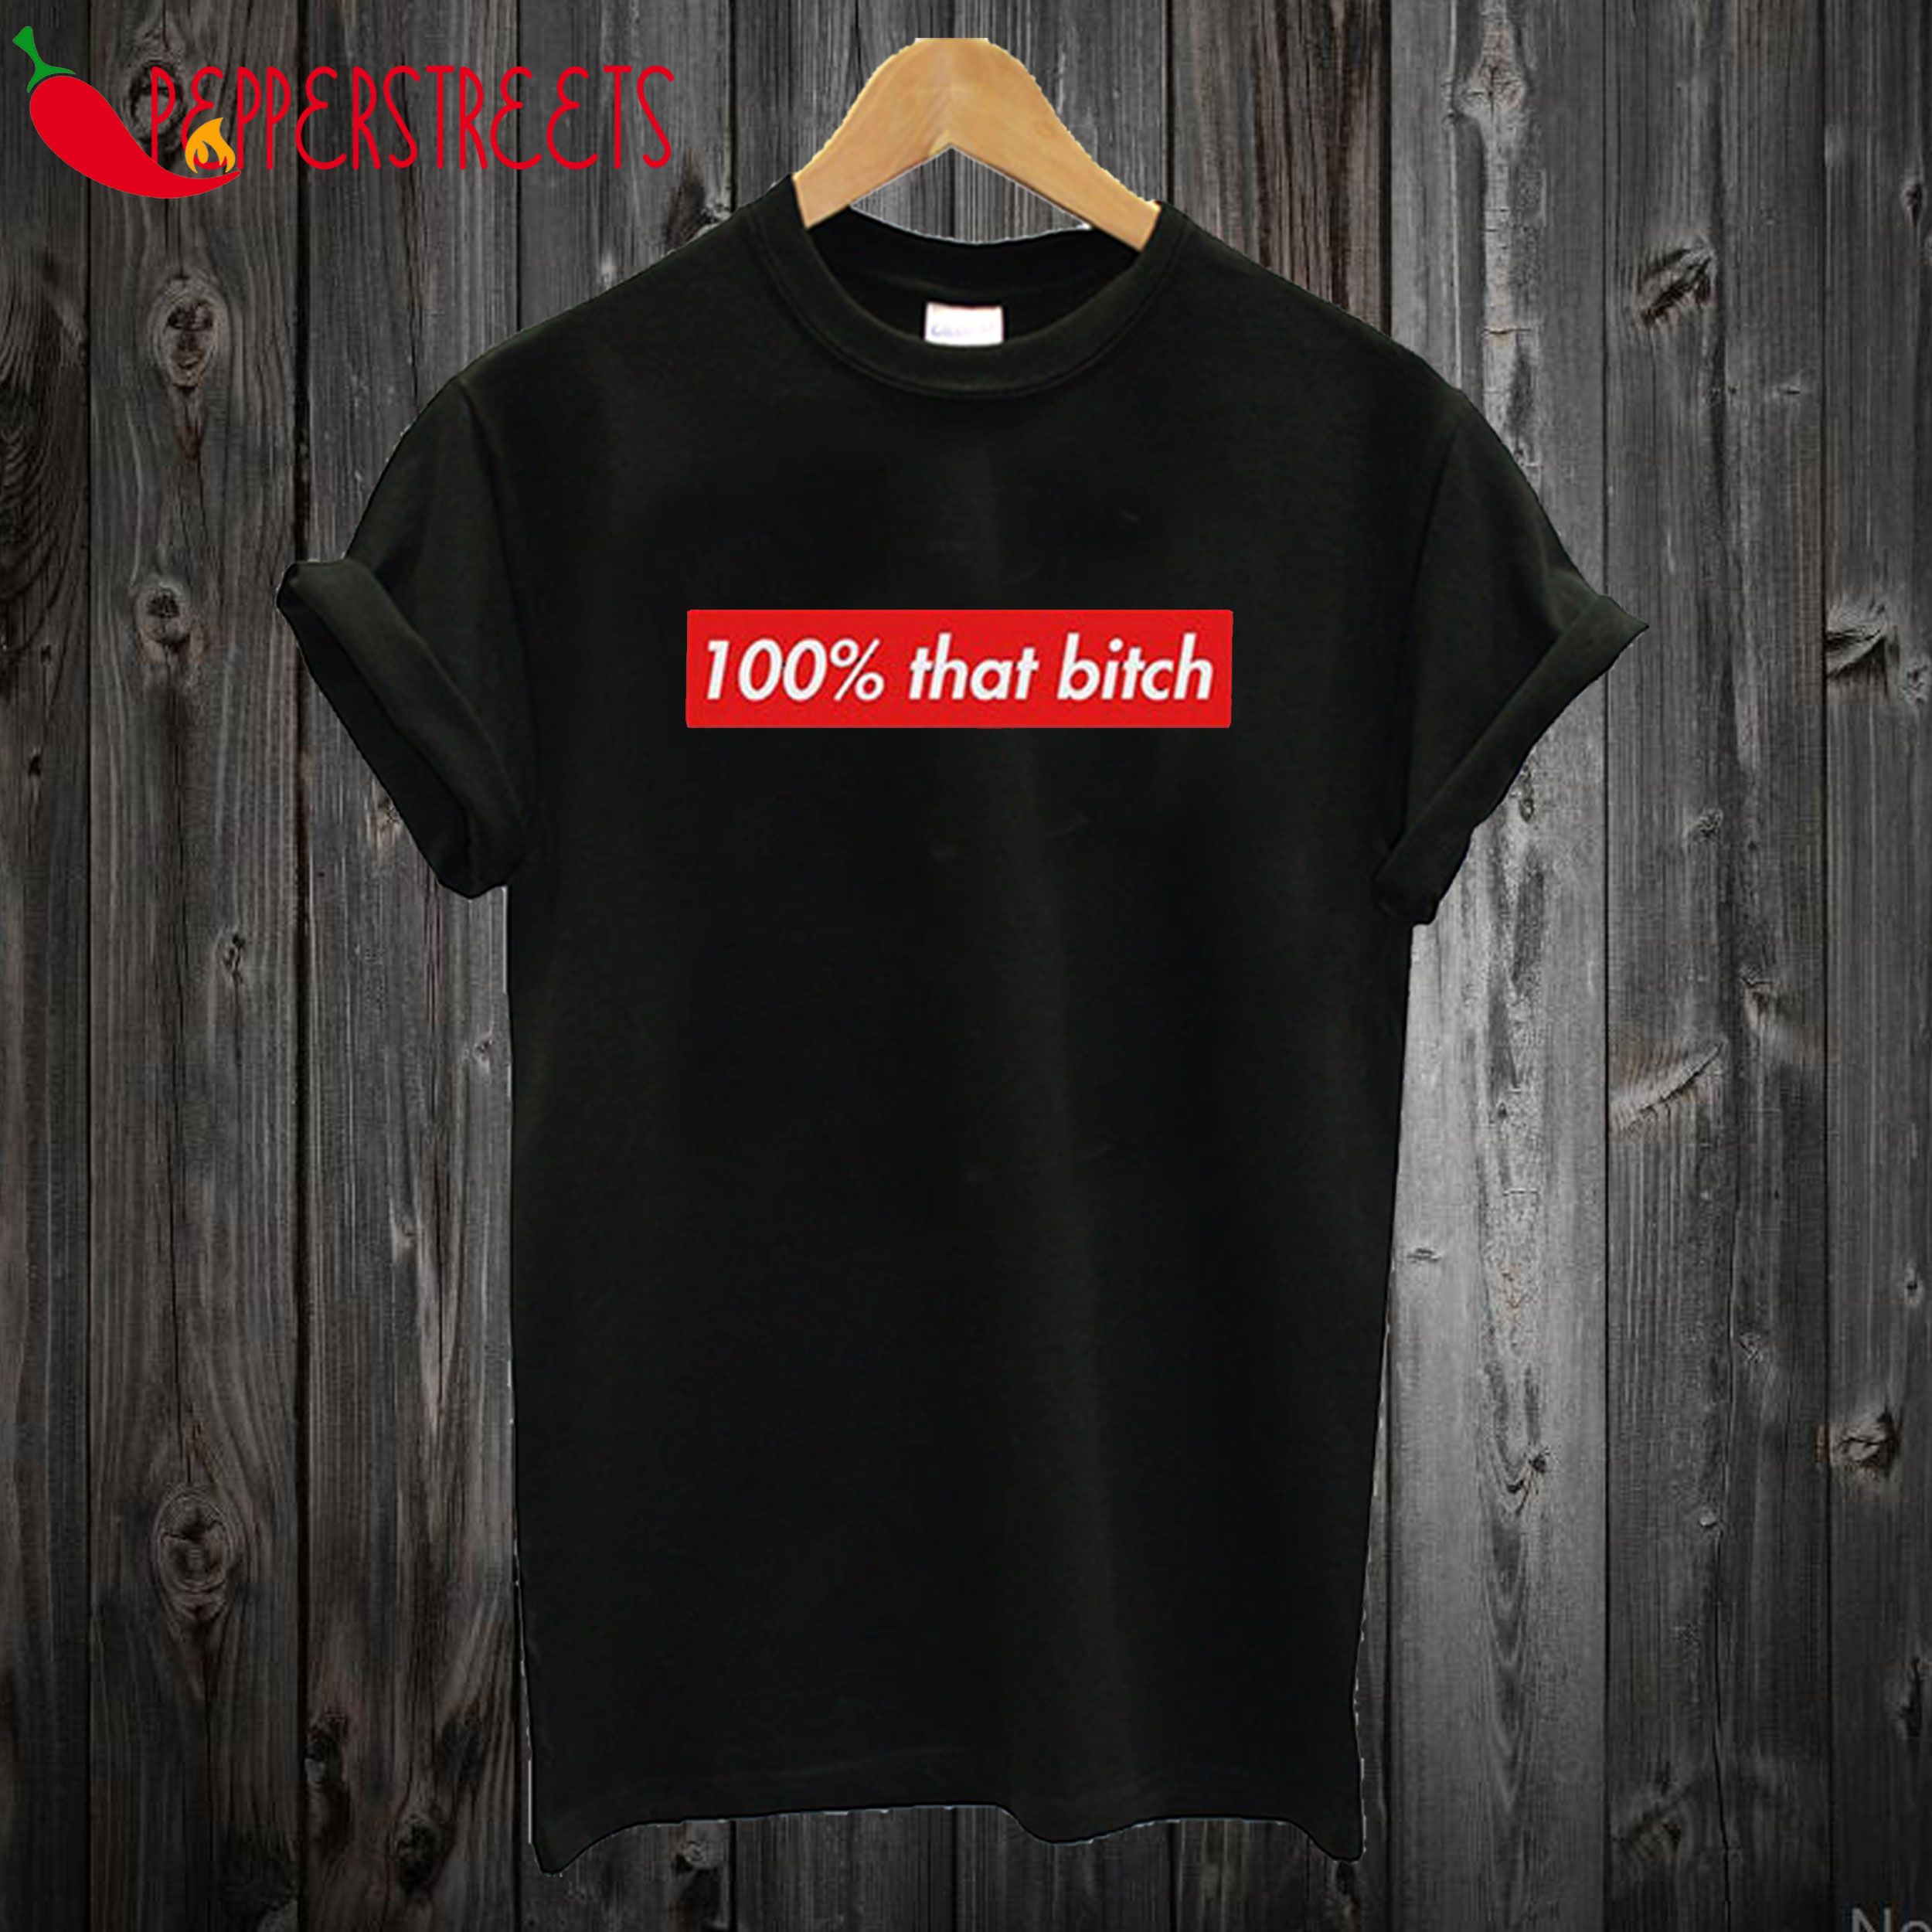 100% That Bitch T-Shirt